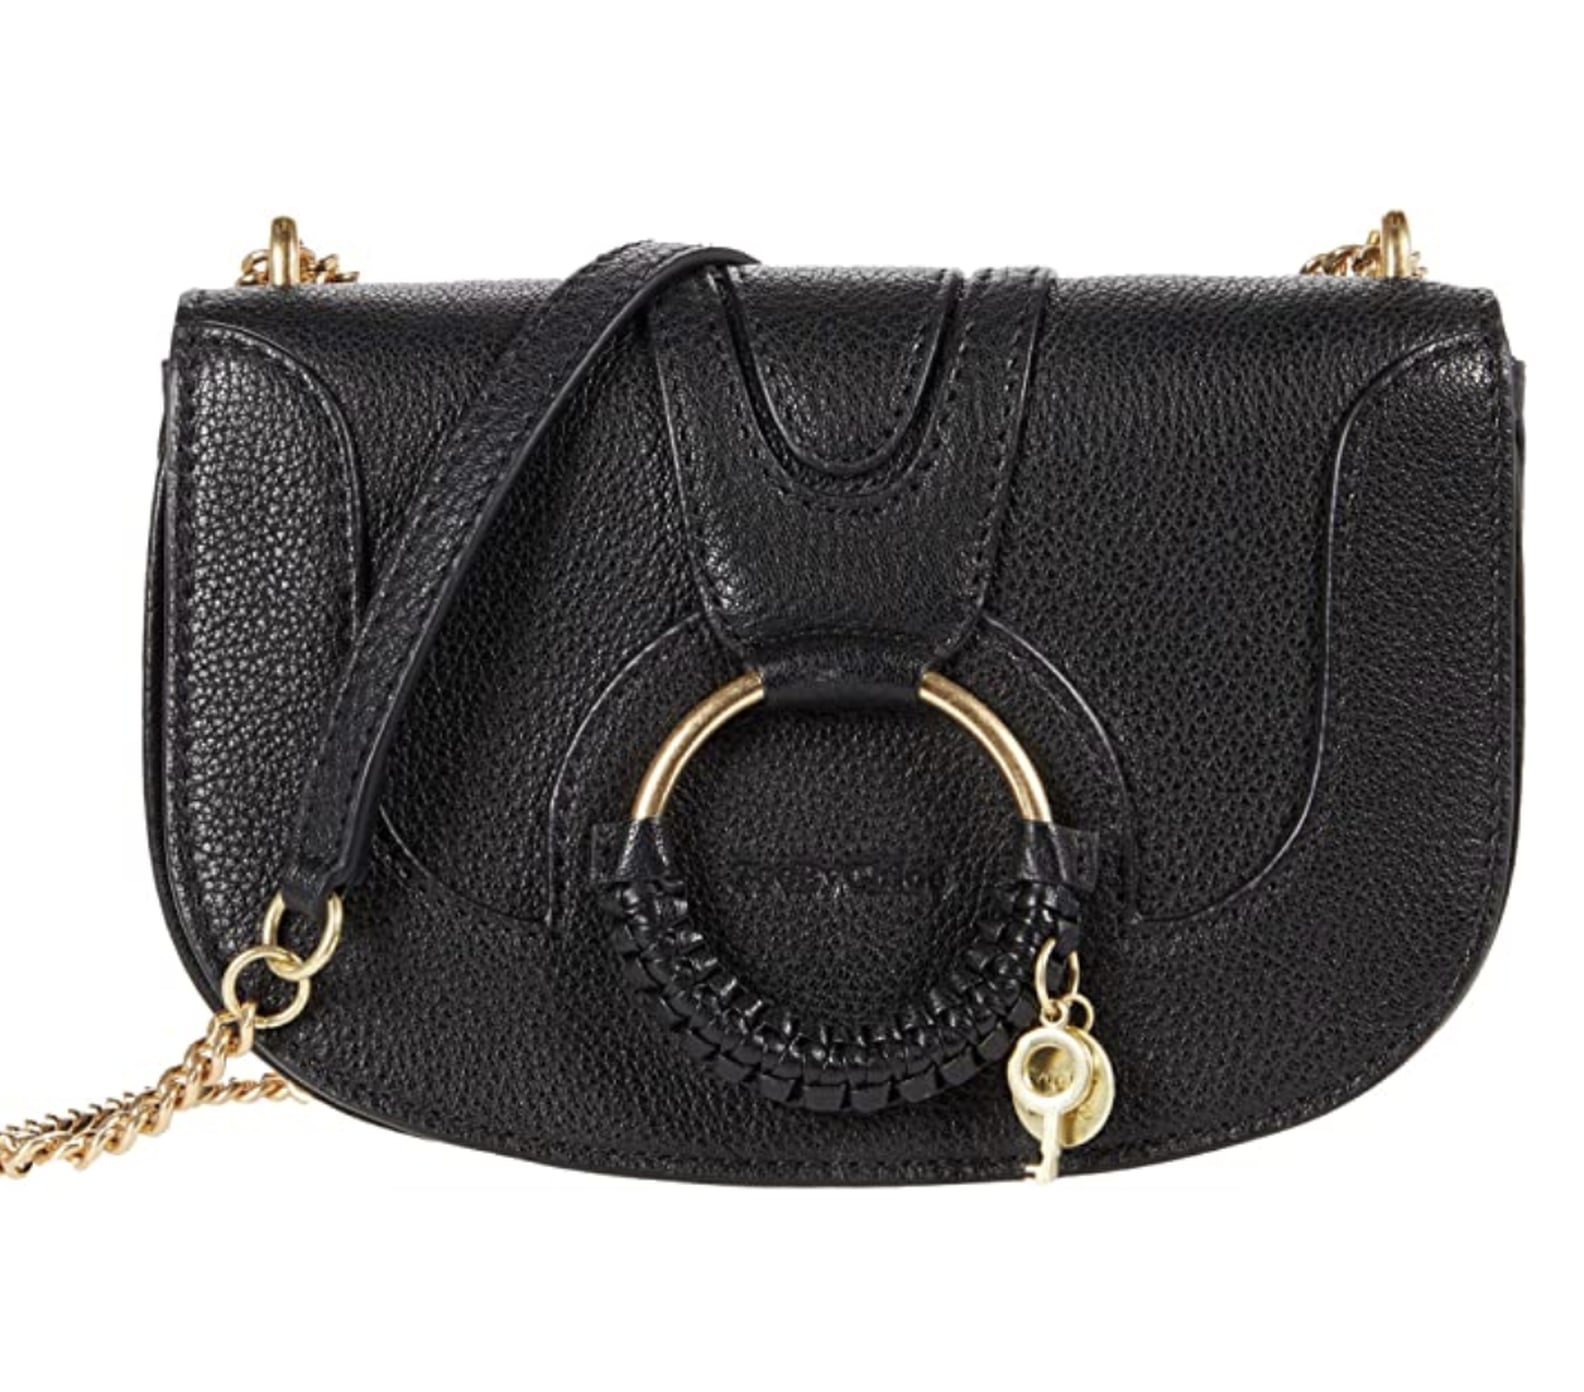 The Best, Most Stylish Fall Handbags to Shop on Amazon | POPSUGAR Fashion